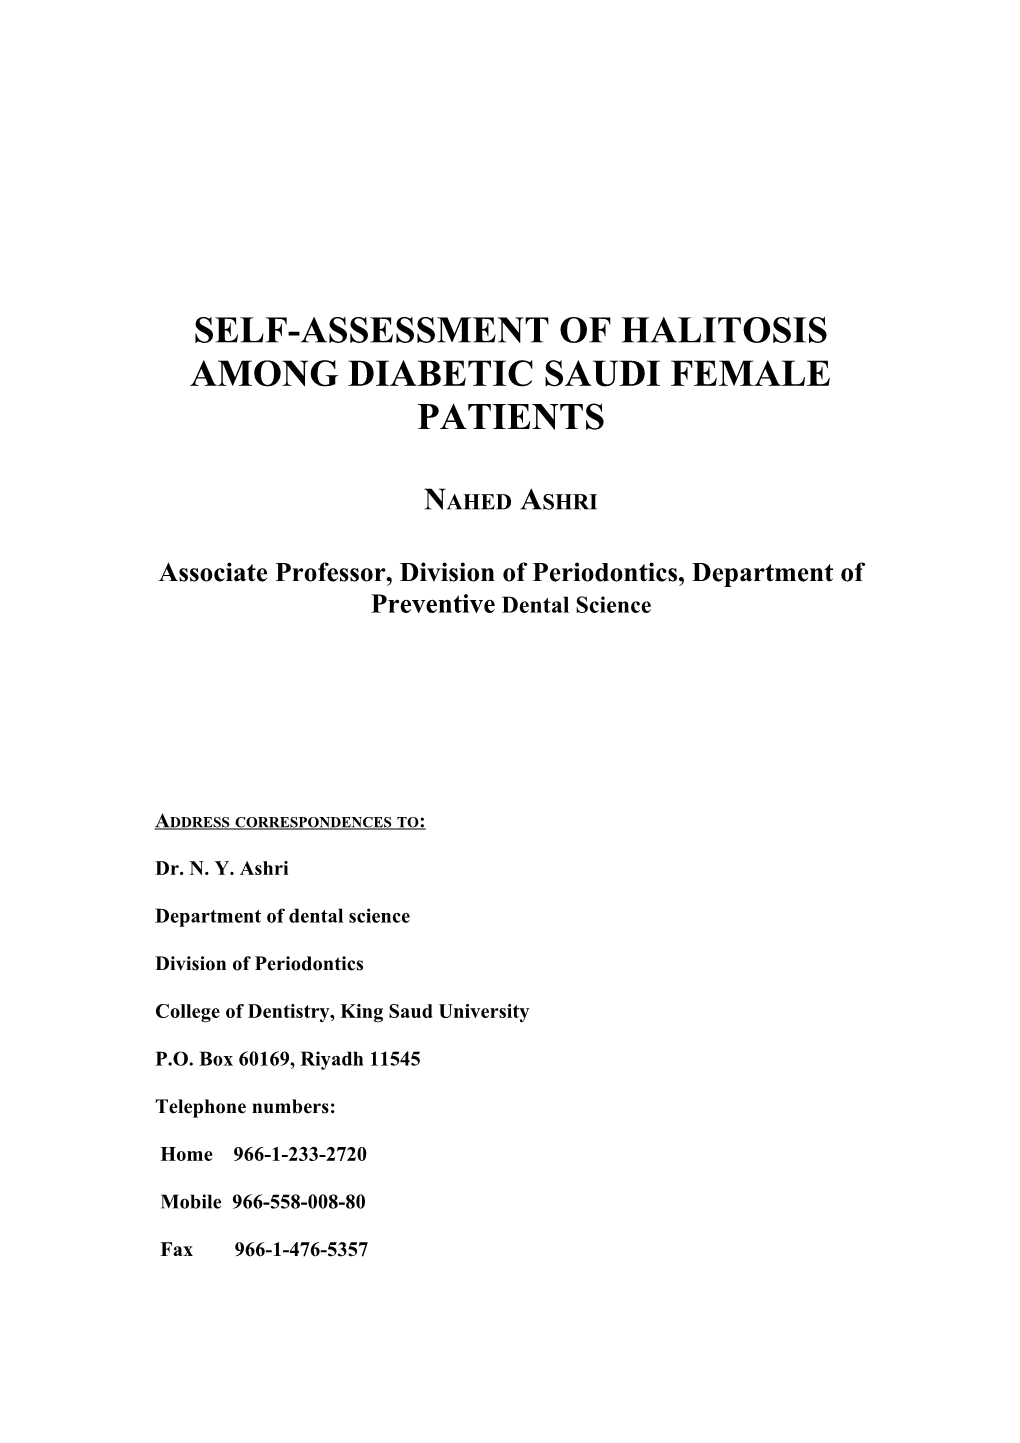 Self-Assessment of Halitosis Among Diabetic Saudi Female Patients